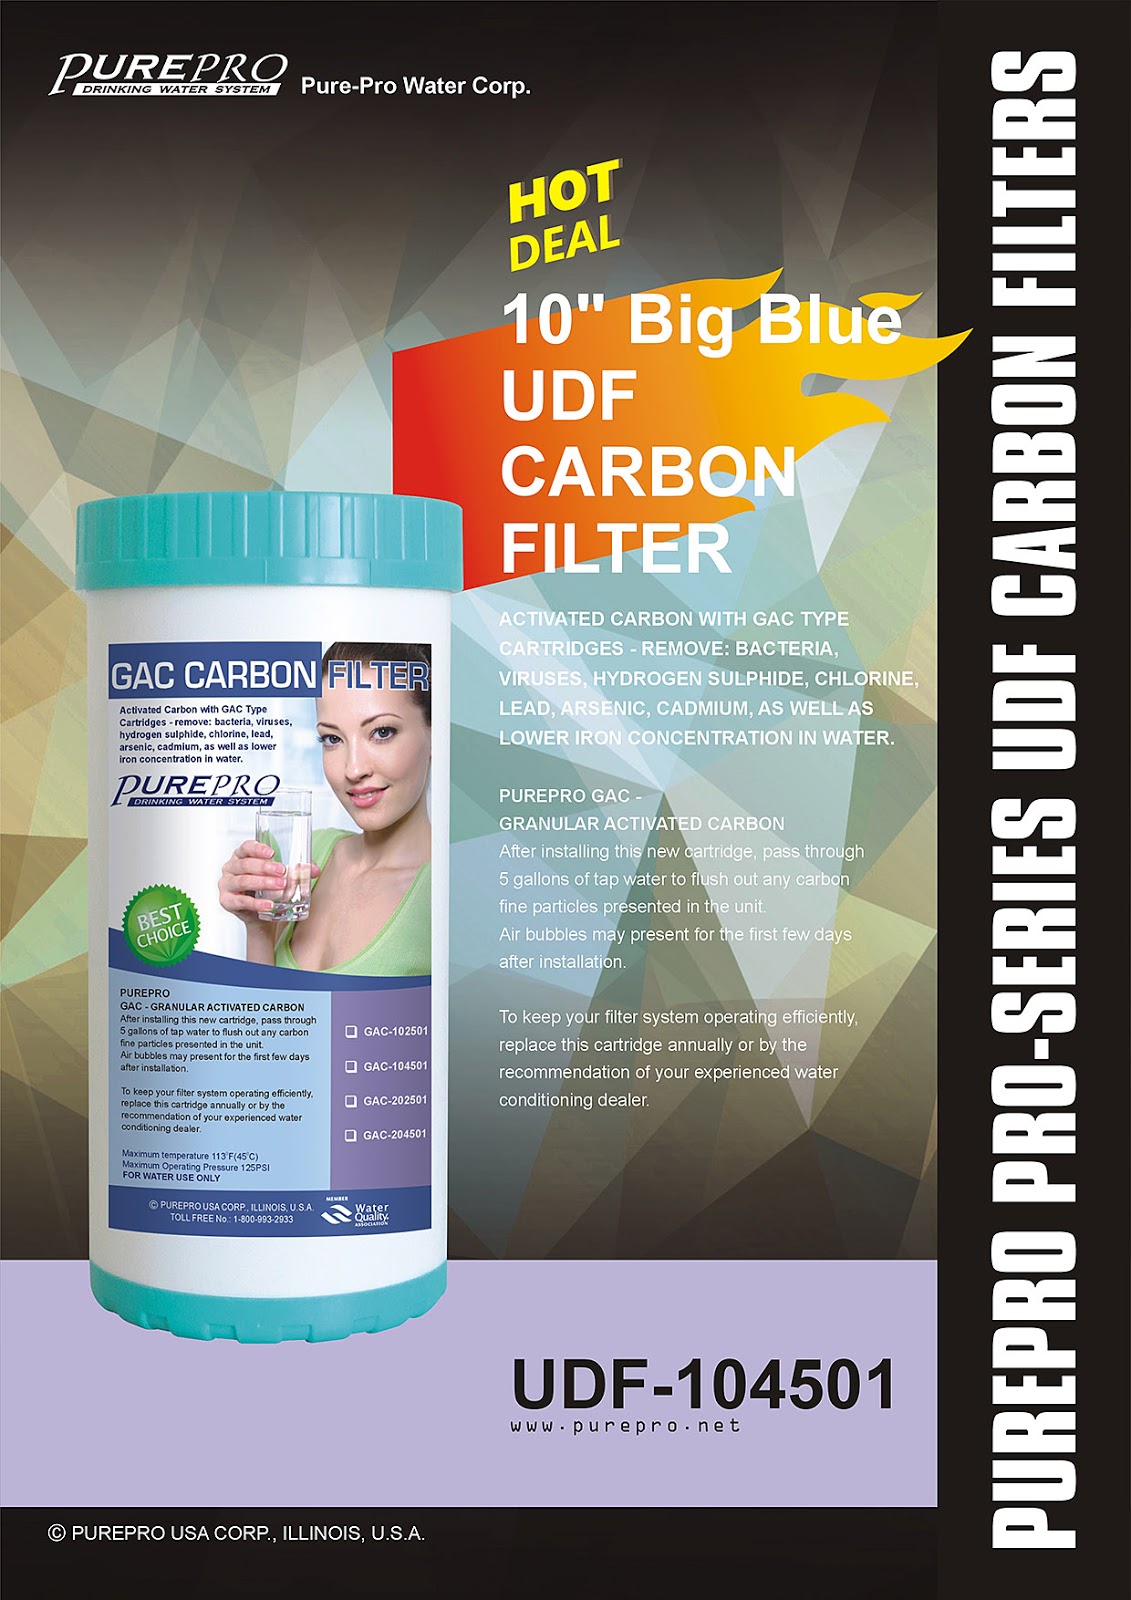 PurePro® USA 10" Big Blue UDF Carbon Filter - PurePro UDF-104501